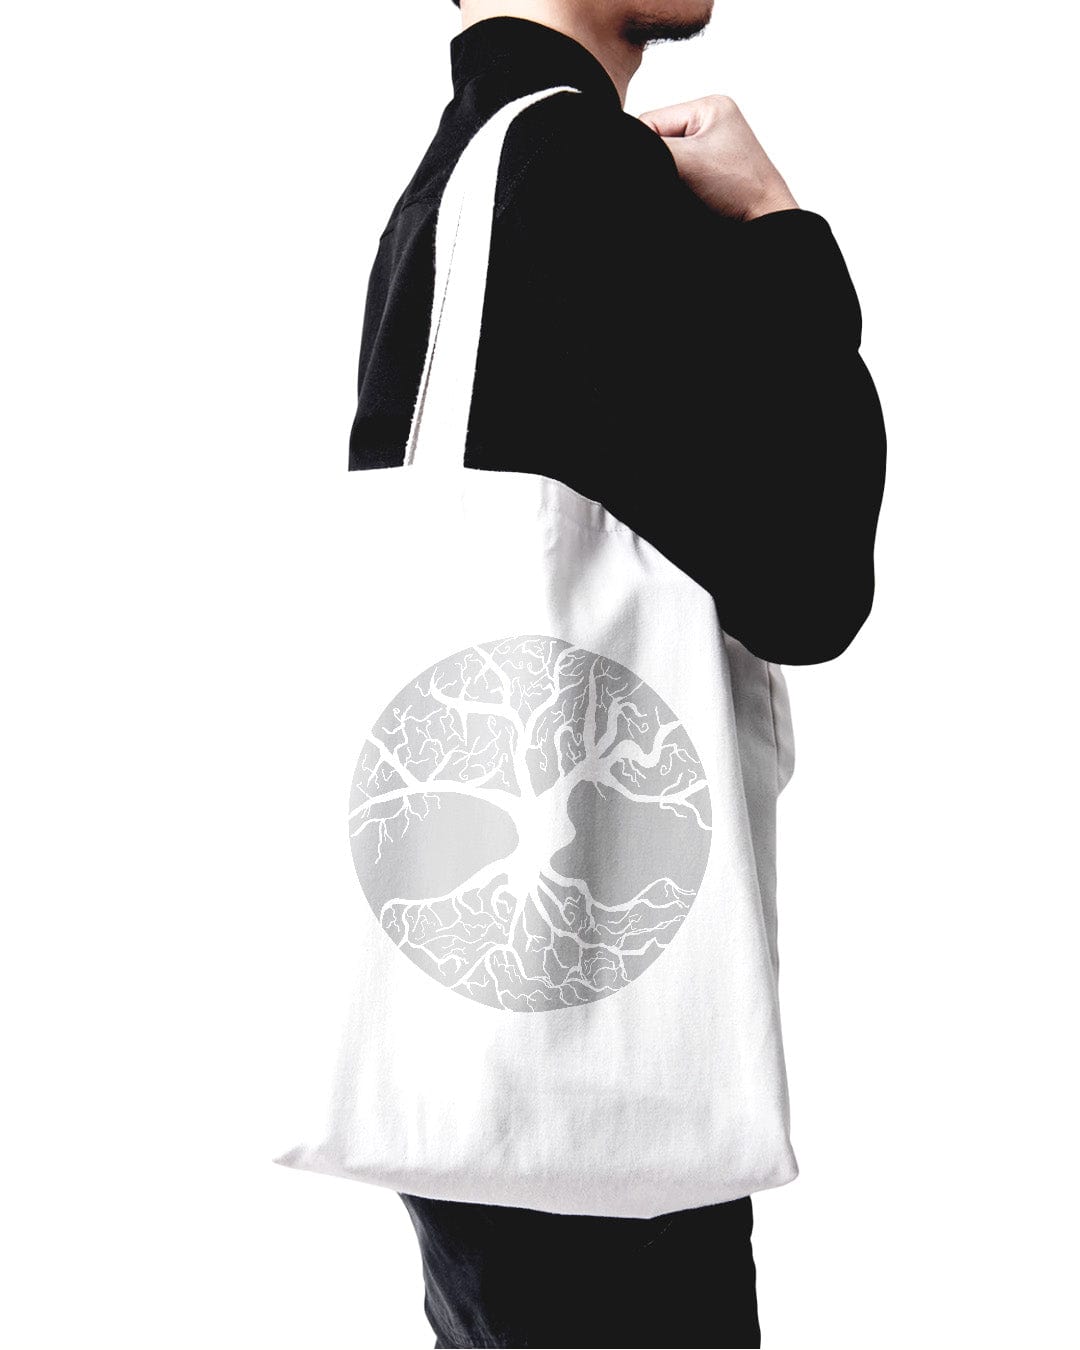 Shop Organic Cotton Tote Bag Tree of Life Symbol Stylish & Eco-Friendly, Shoppers, USA Boutique